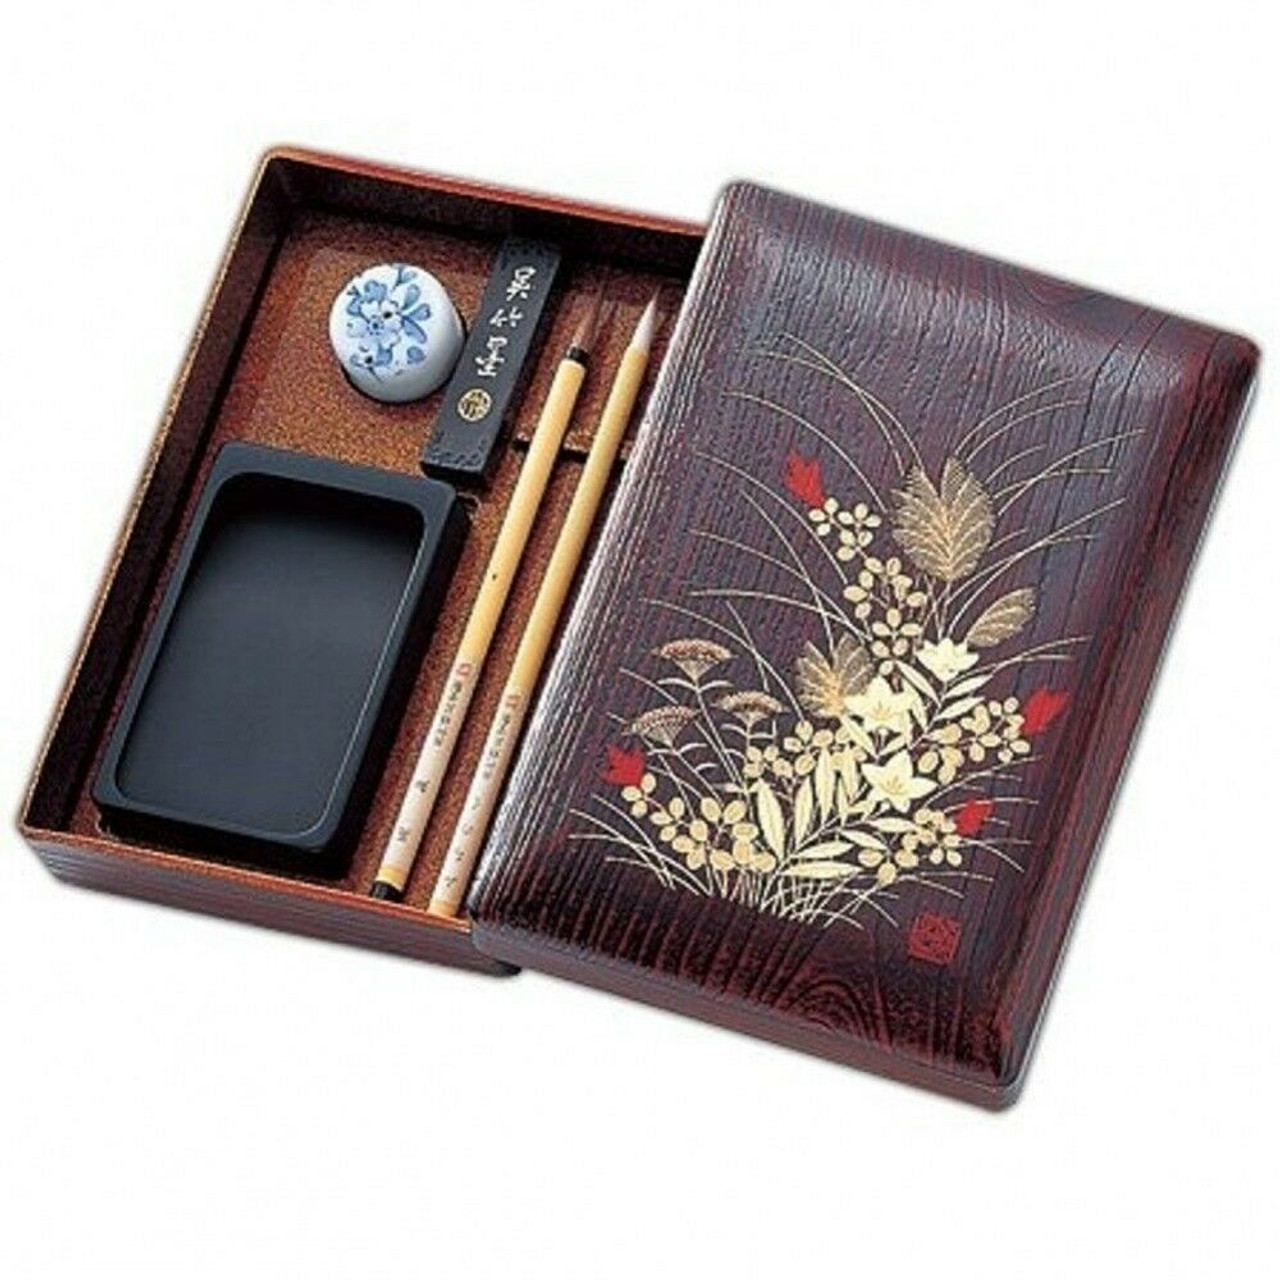 Product of Gifu Japan Japanese Mino Washi Calligraphy Shodo Set, Inkstone, Sumi Ink Stick and Detachable Shuji Brush Pen with Compact Wood Box